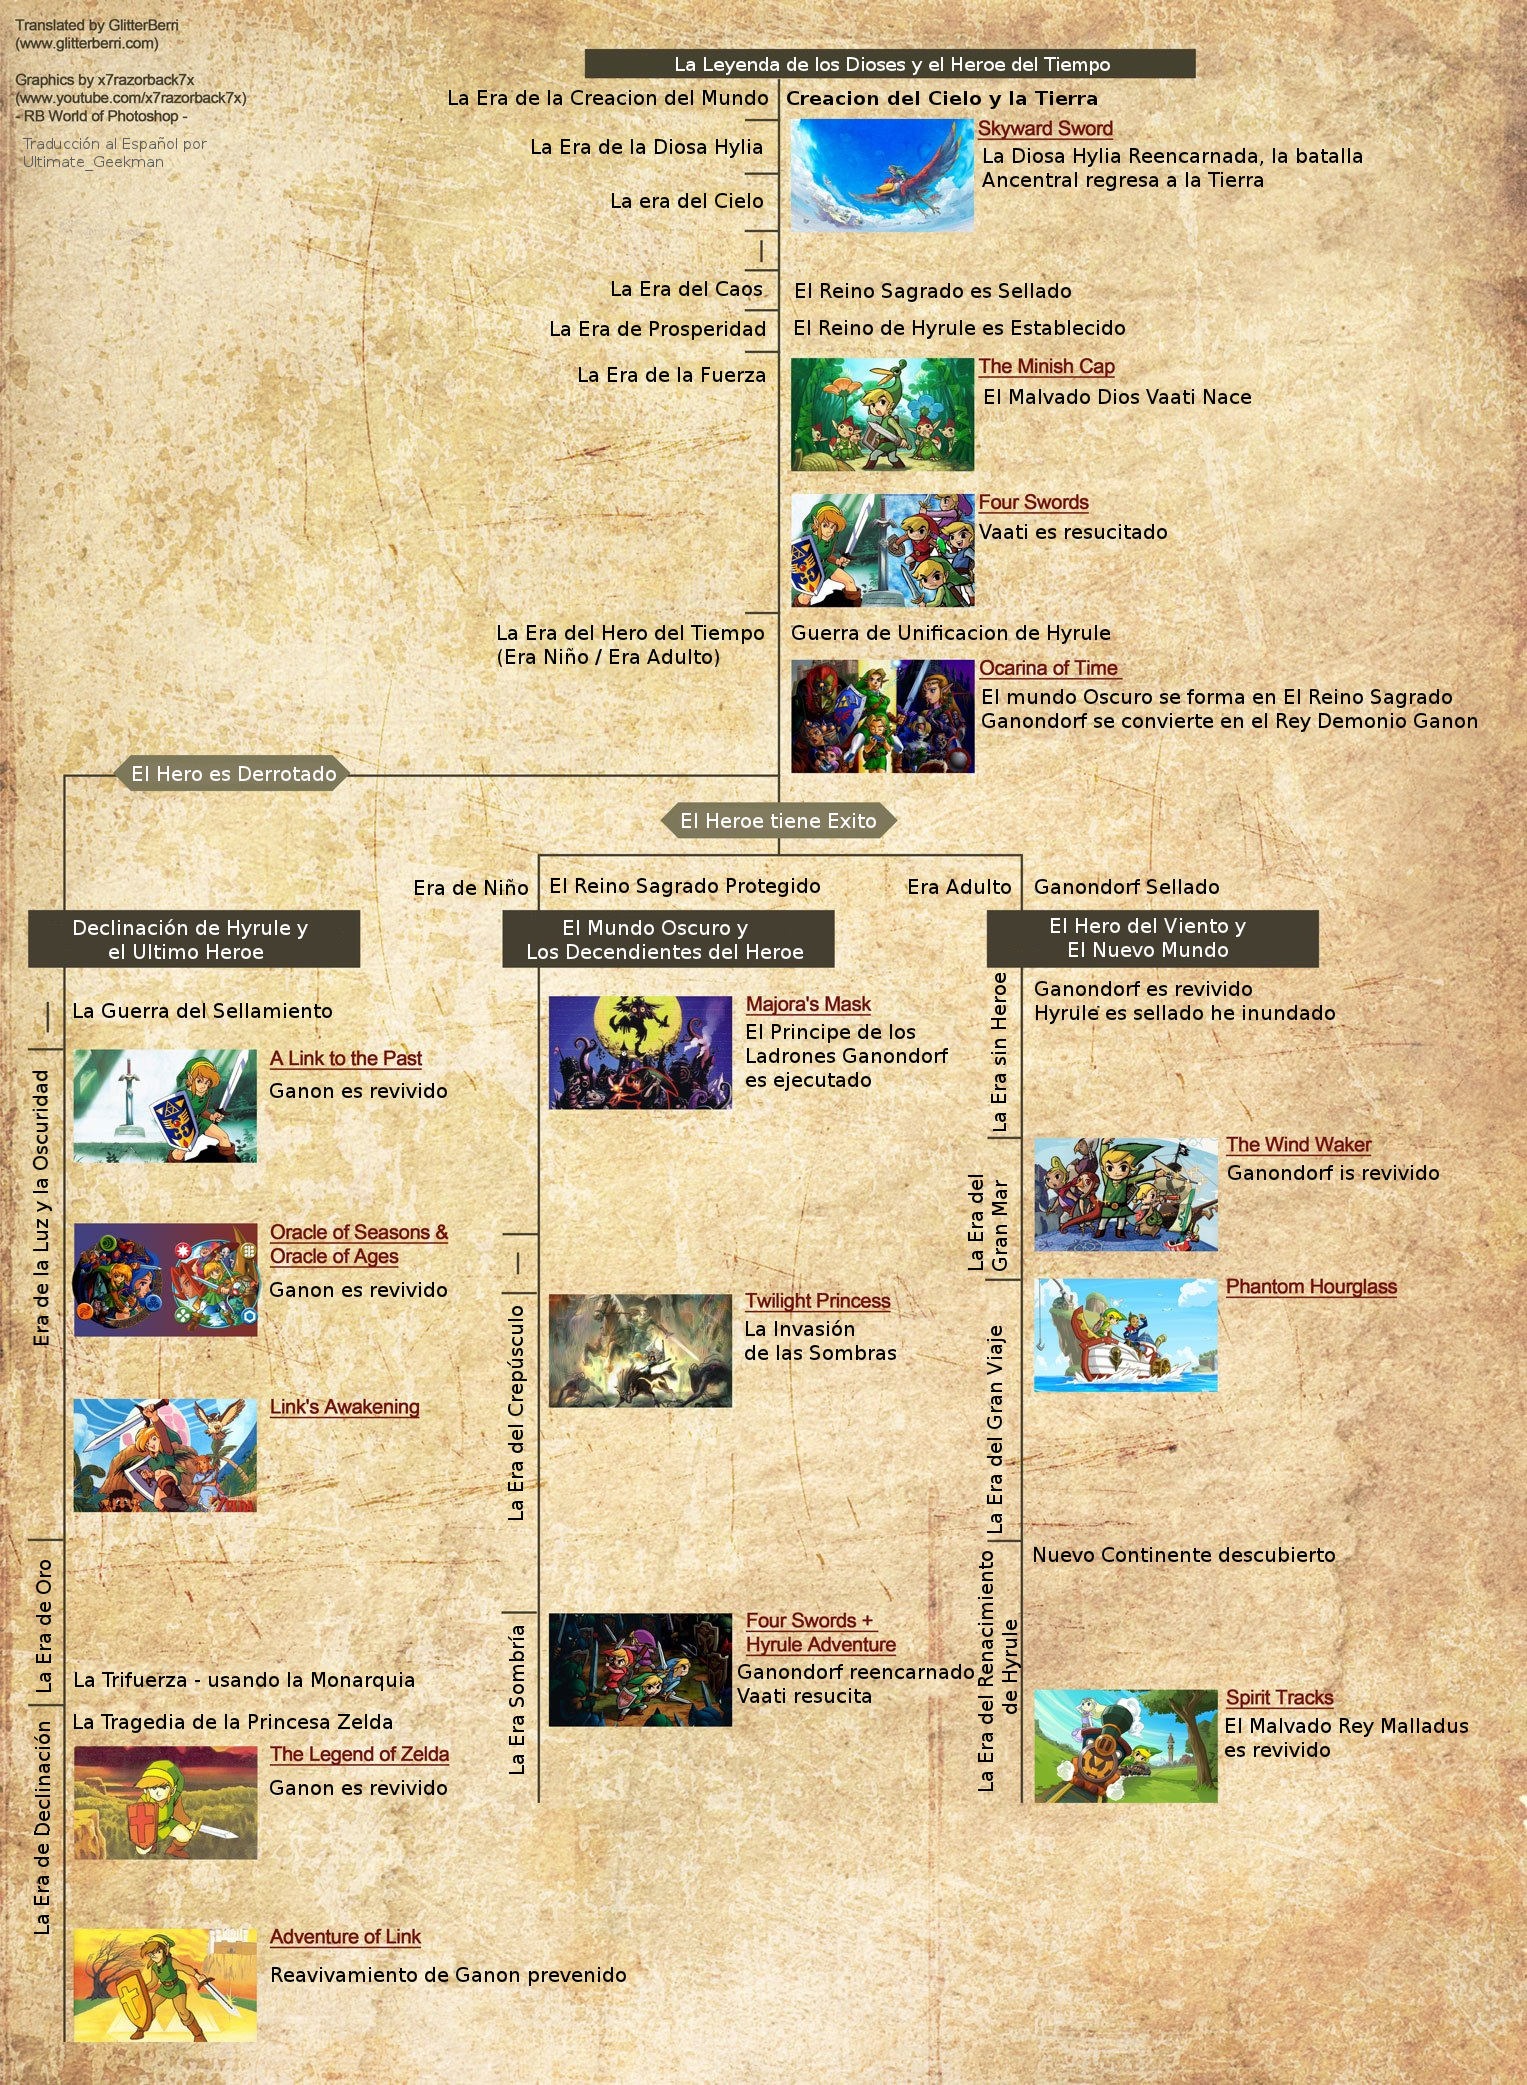 Saga The Legend of Zelda - Página 11 Latest?cb=20120110014306&path-prefix=es